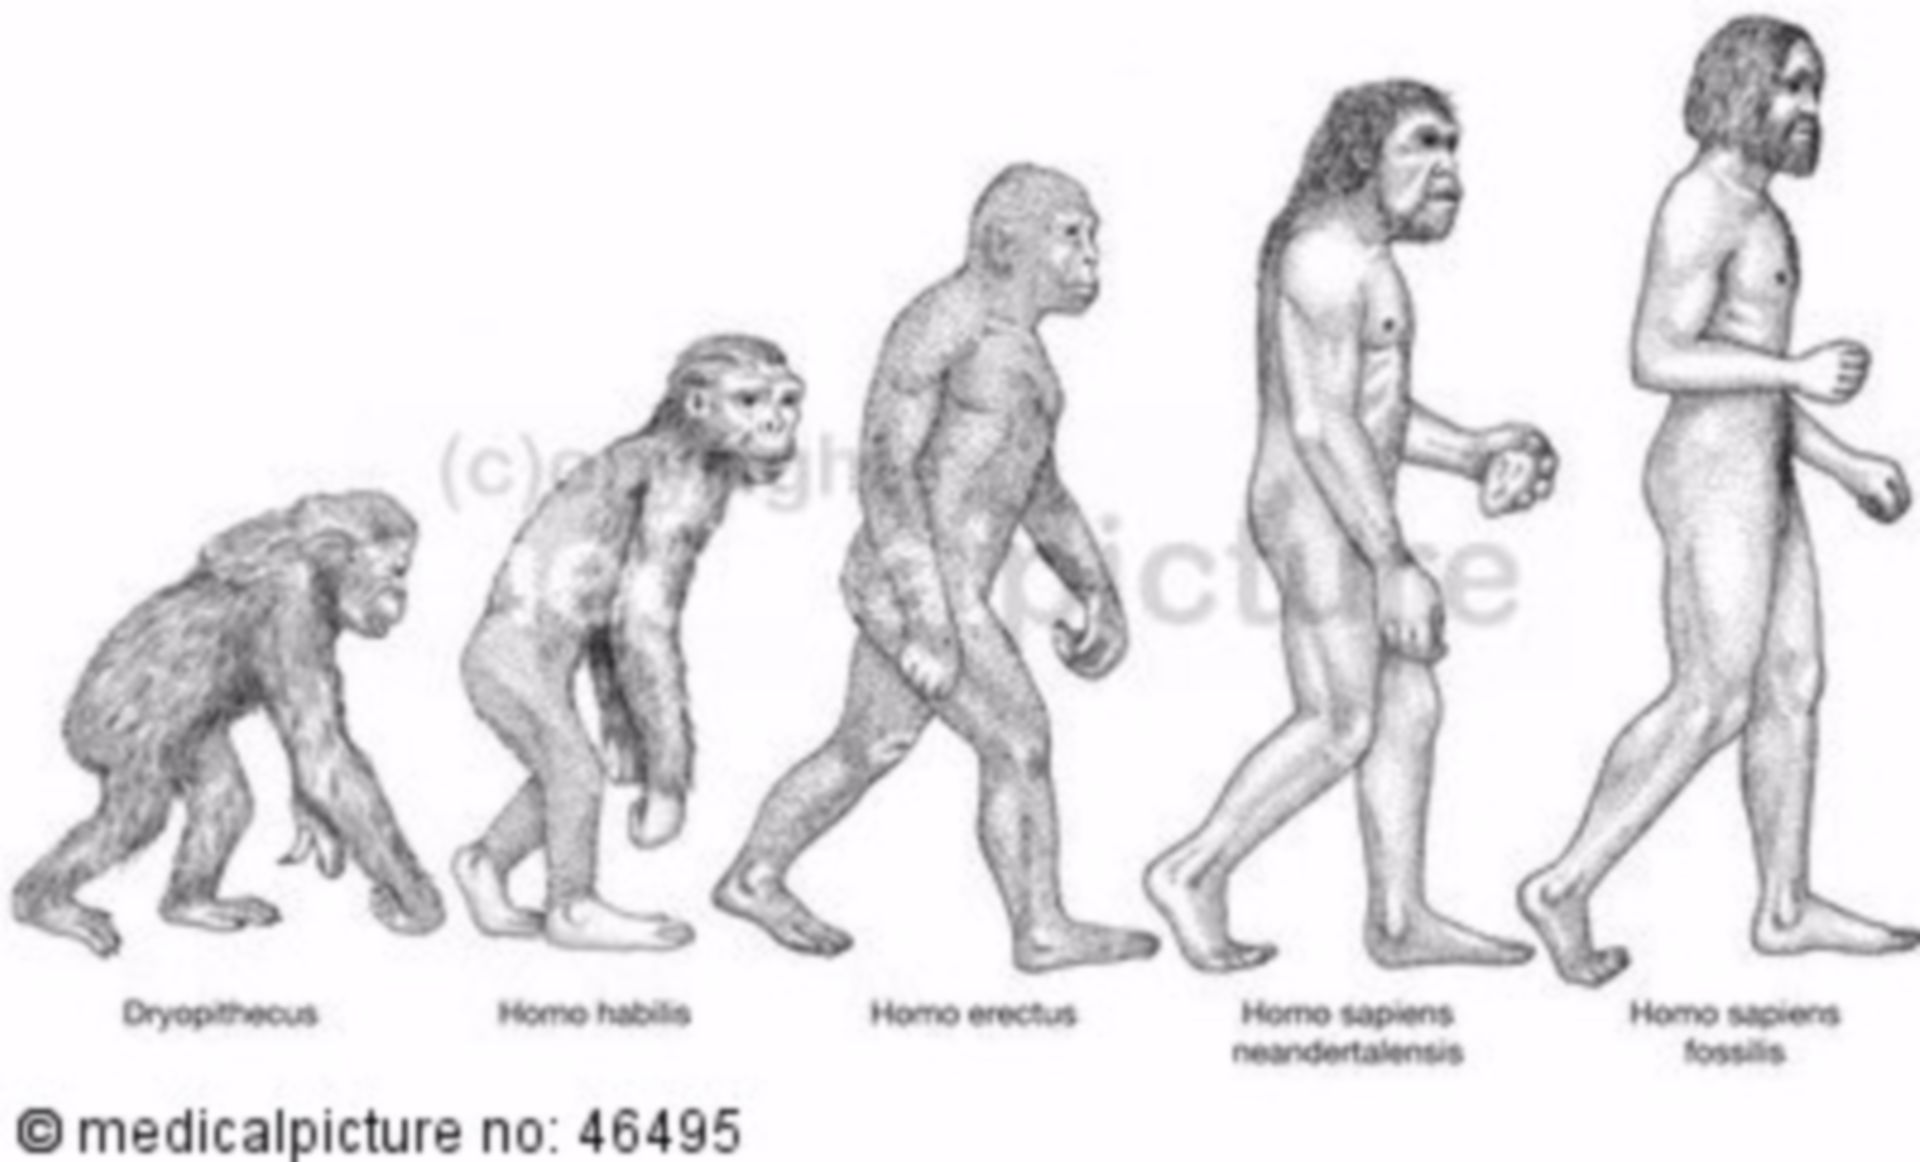 Theory of evolution, development